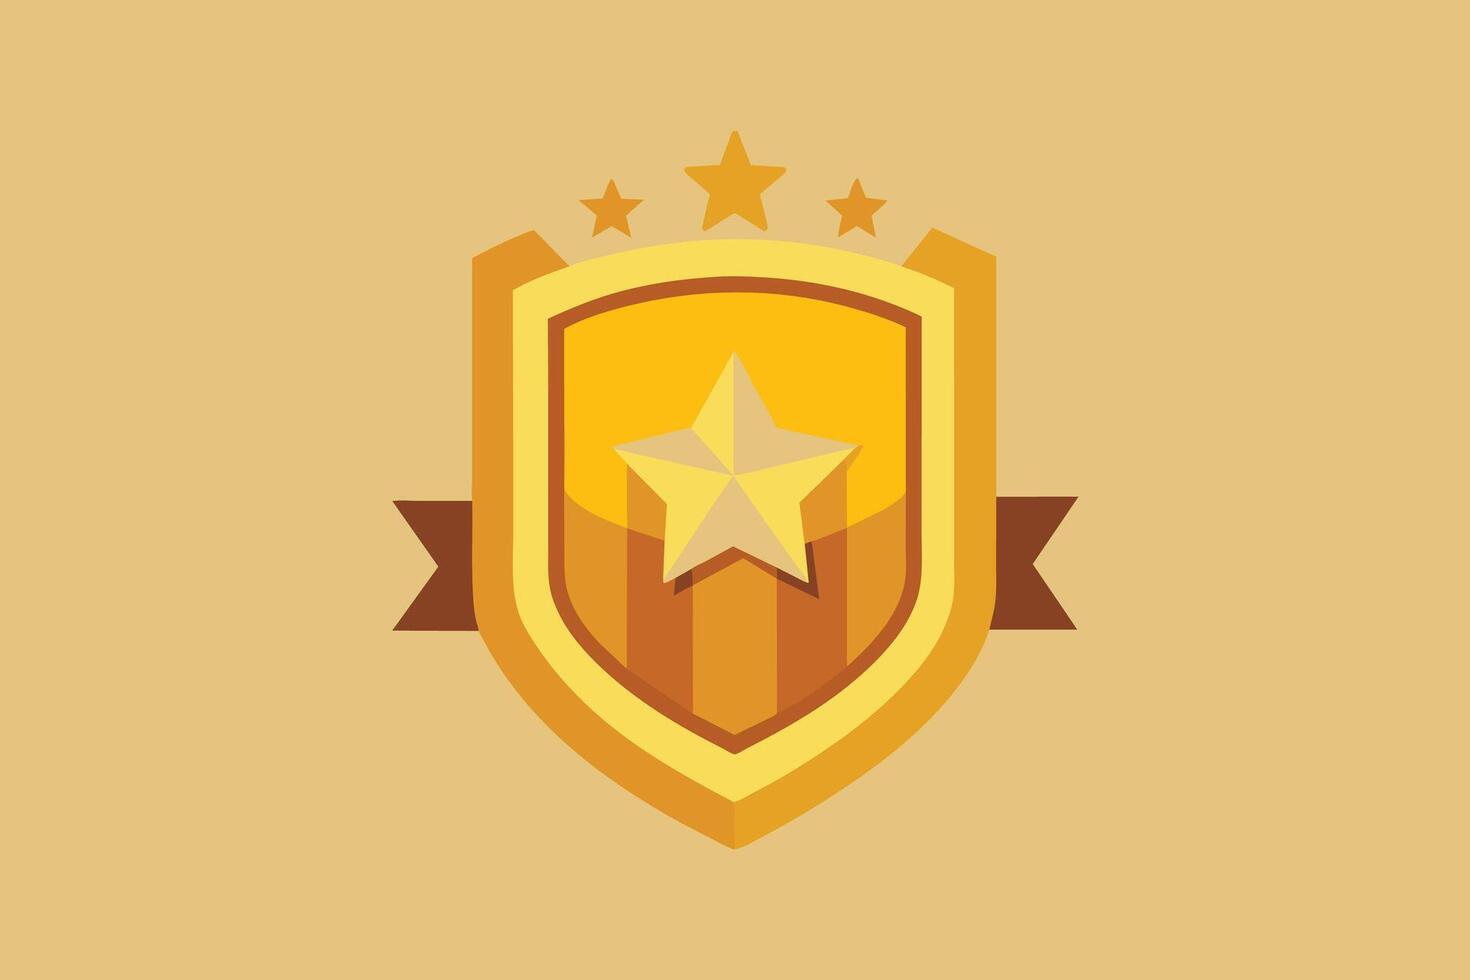 Gold Badge Elements design vector